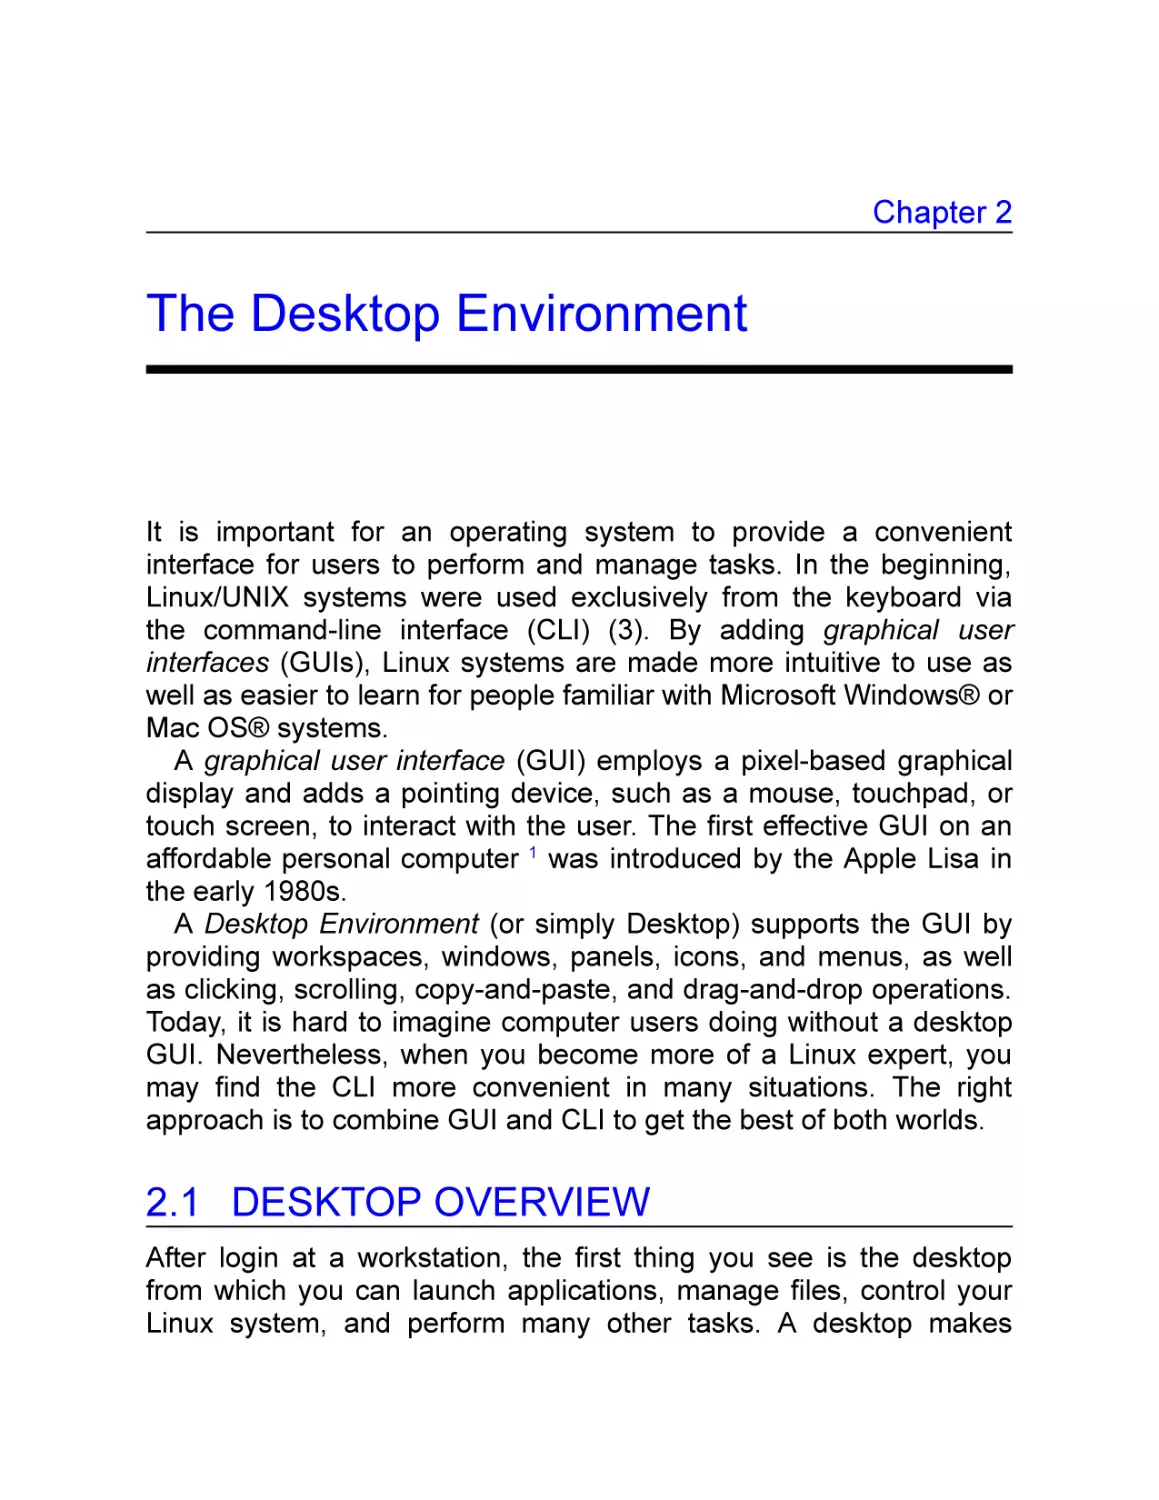 2 The Desktop Environment
2.1 Desktop Overview